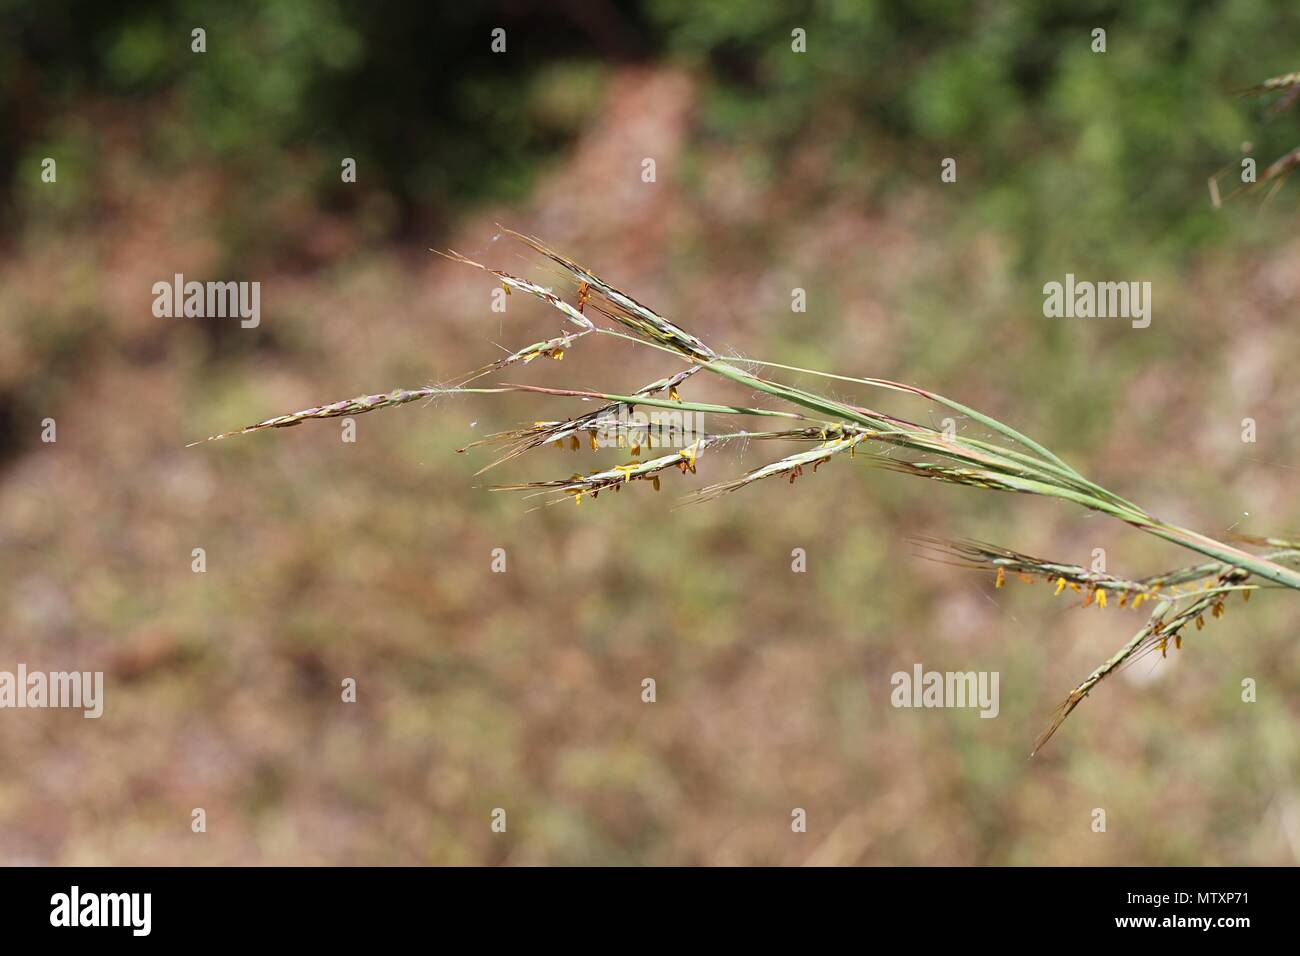 Flowers and stems of grass Cymbopogon hirtus / Hyparrhenia hirta Stock Photo